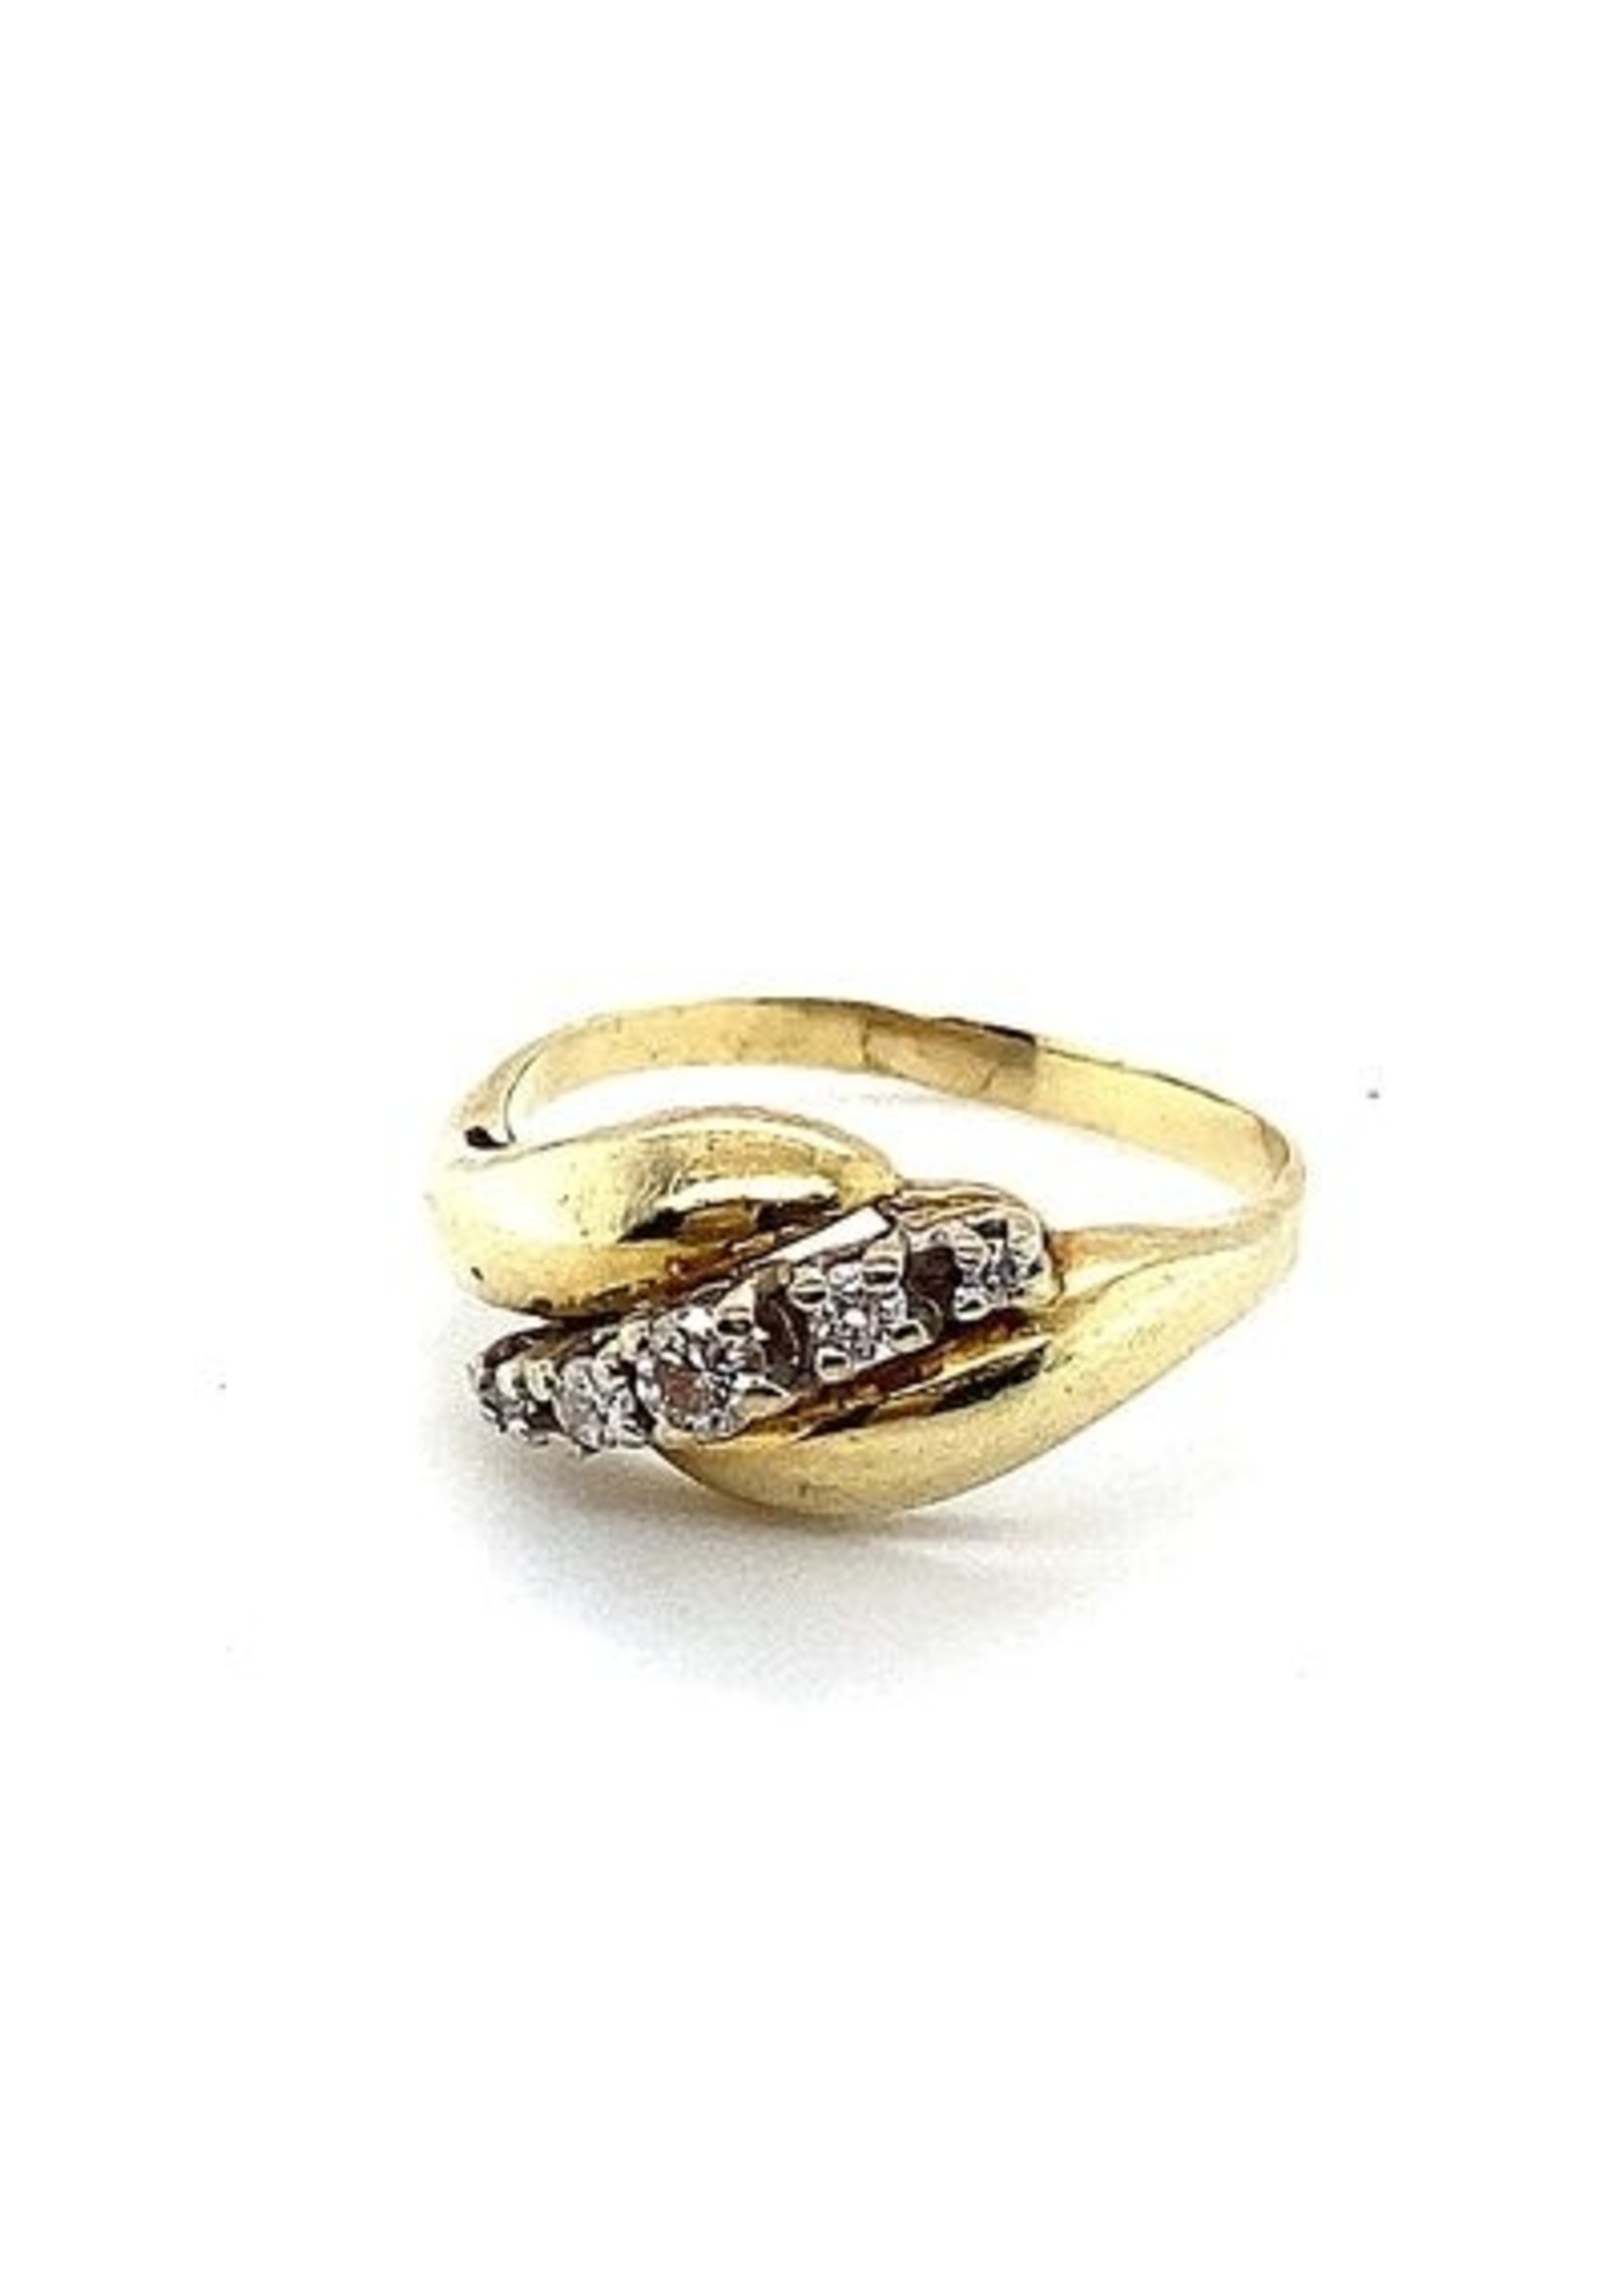 Vintage & Occasion Occasion gouden fantasie ring met 5 diamanten 0.21ct